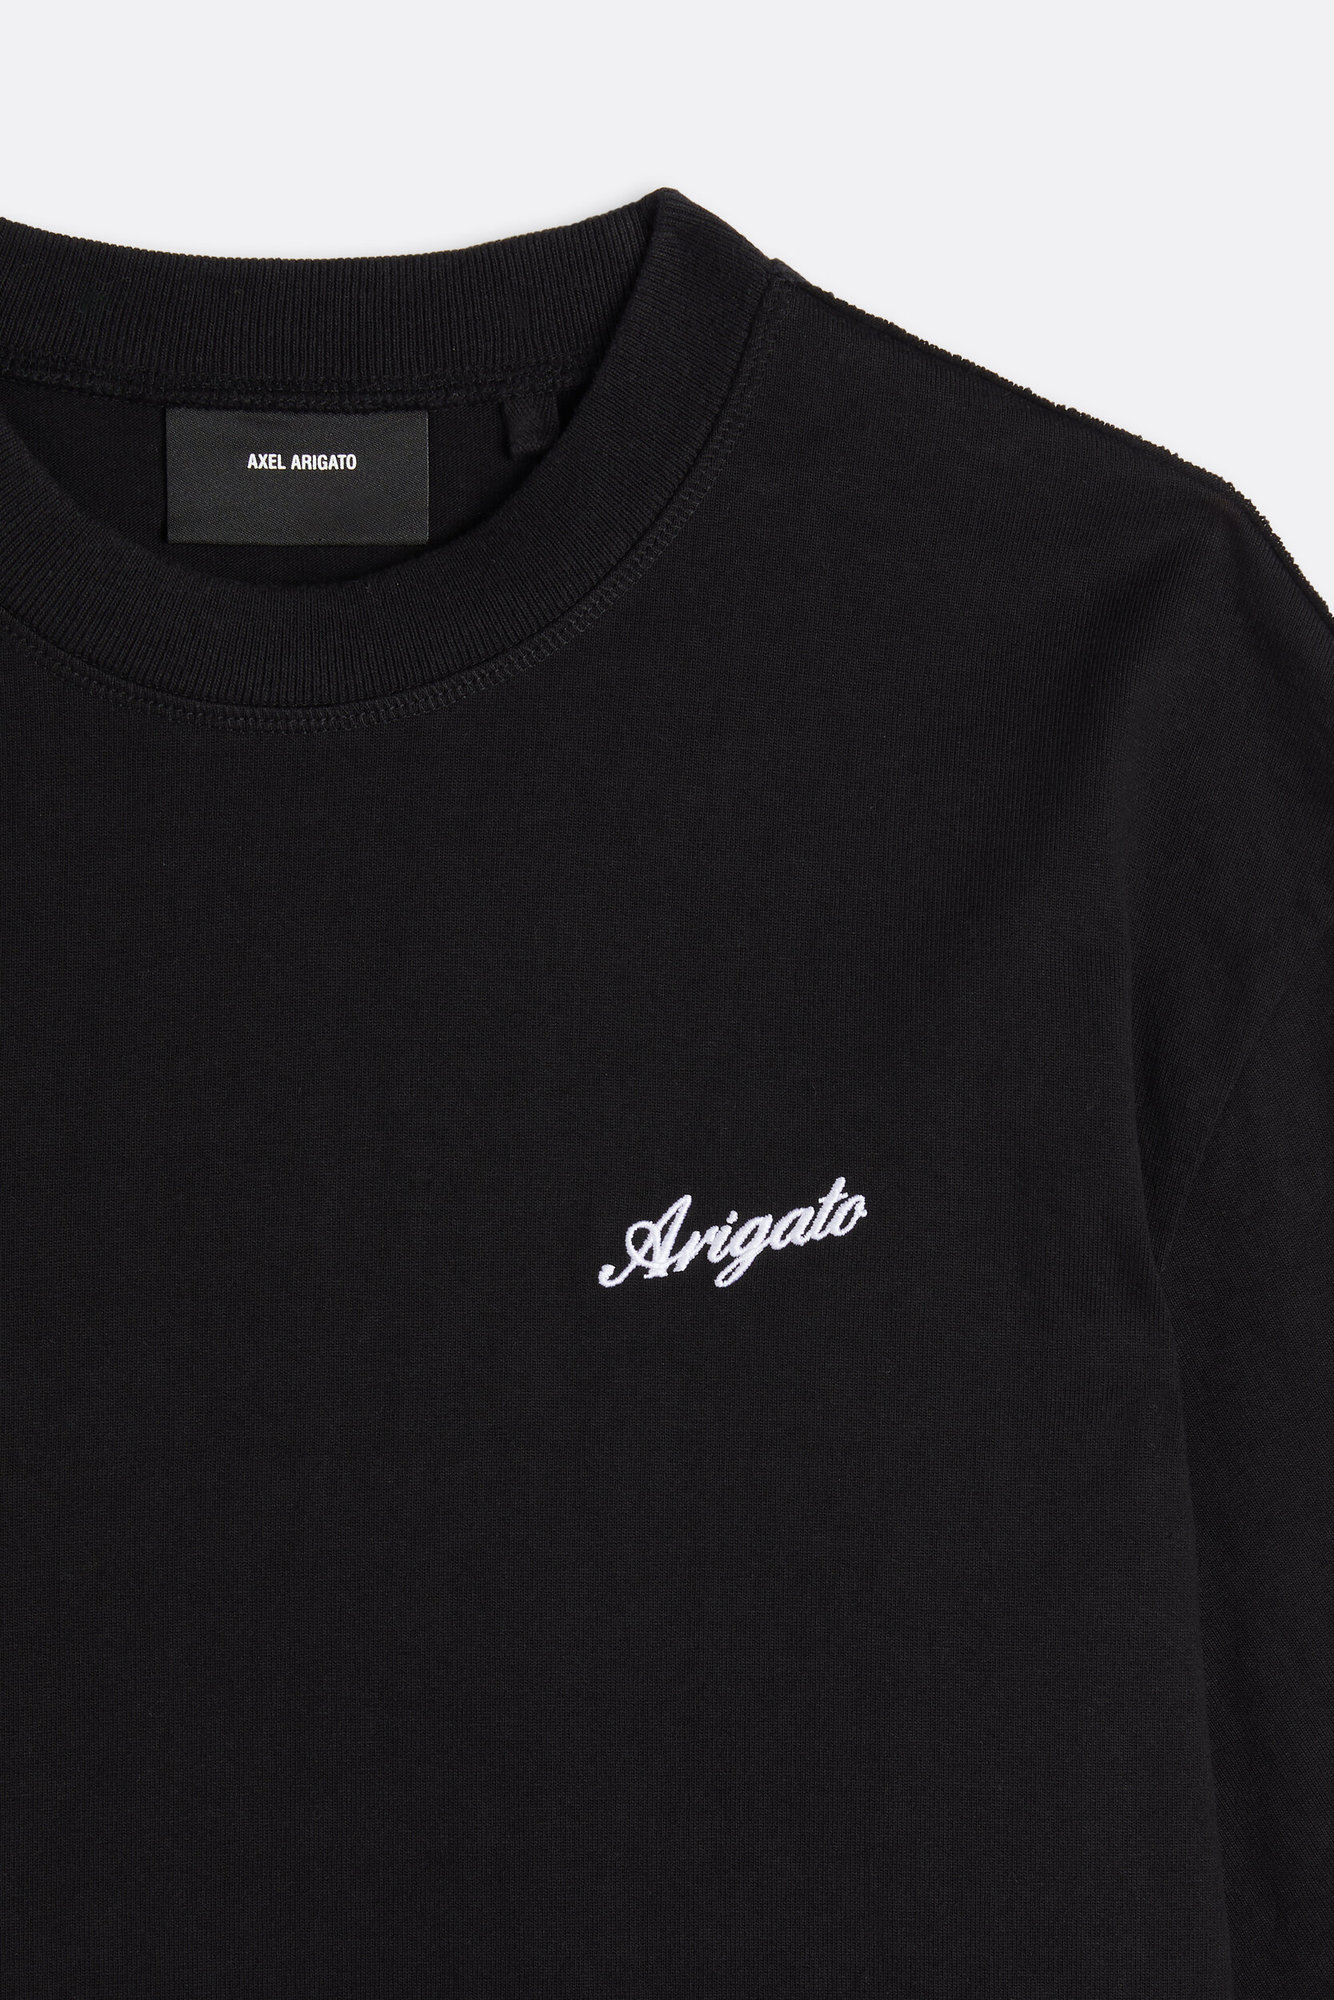 AXEL ARIGATO Honor T-Shirt in Black XS